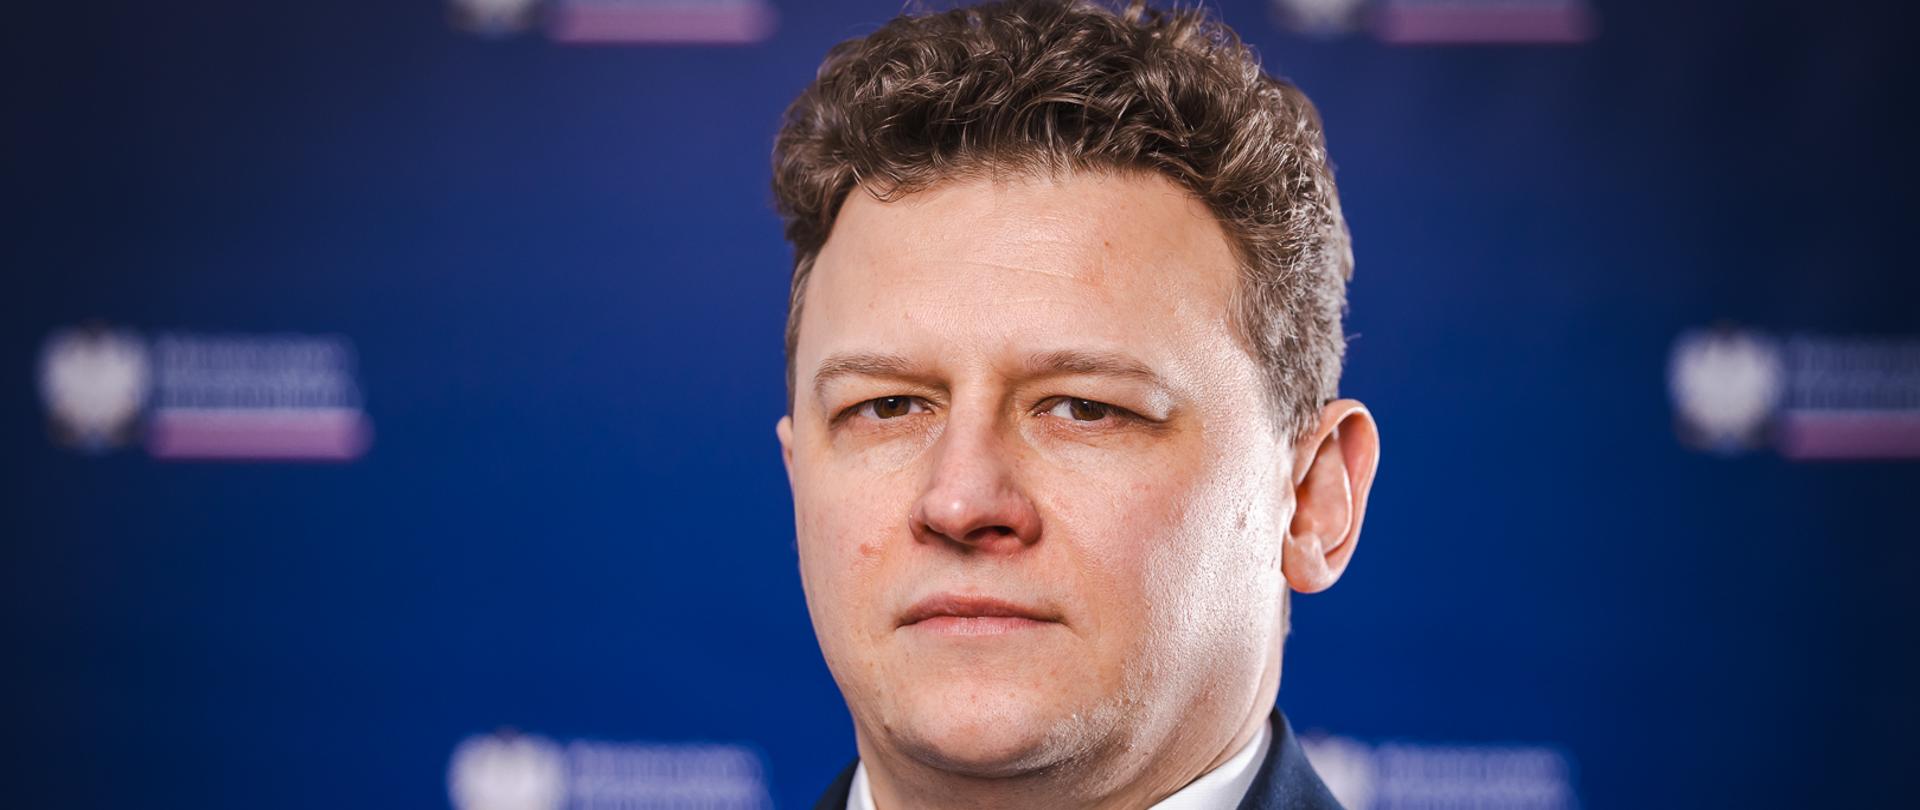 Dyrektor Generalny Ministerstwa Infrastruktury Marcin Grabowski